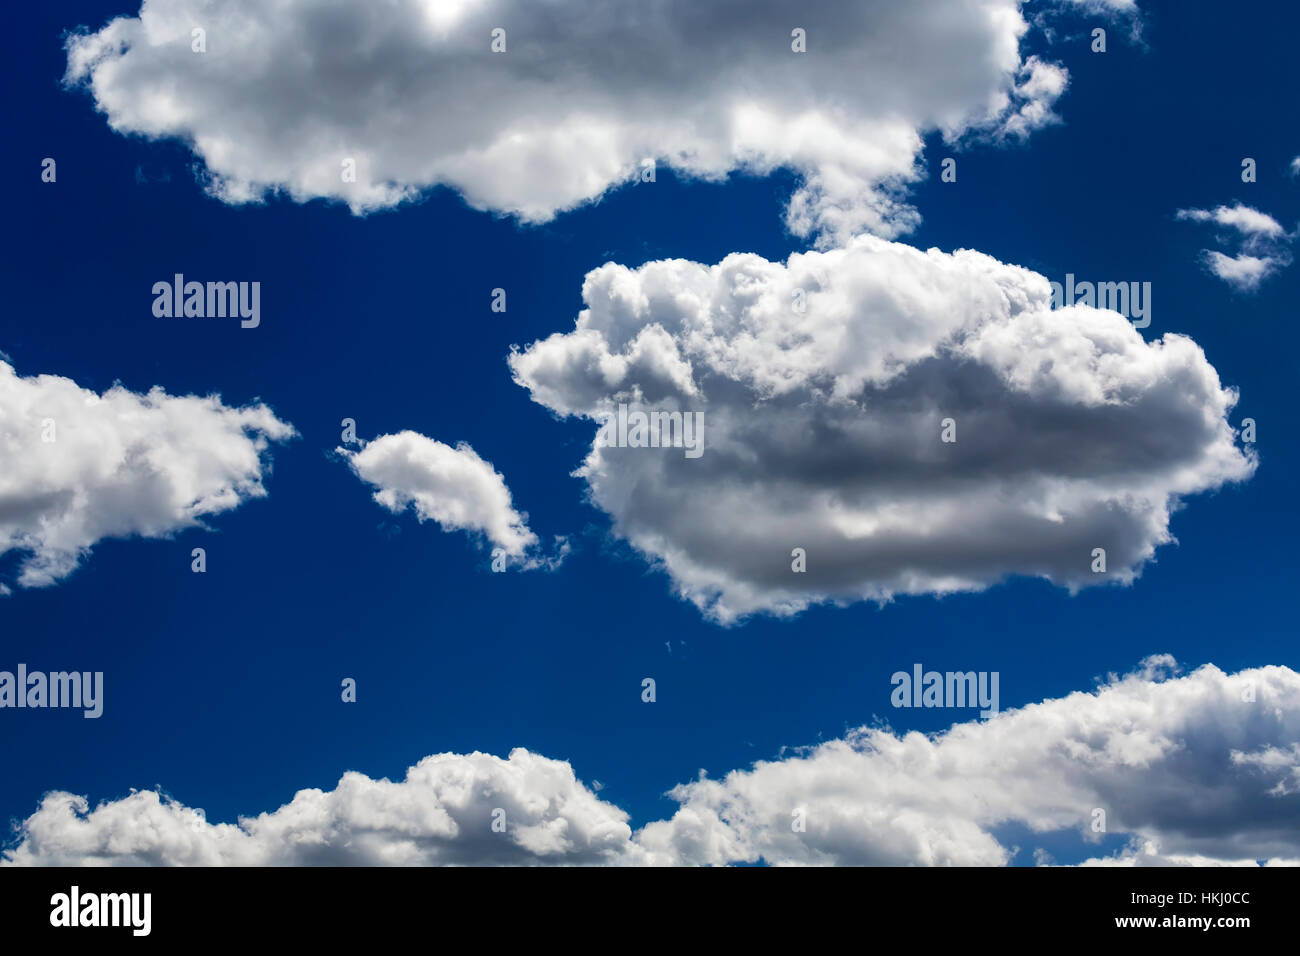 Große weiße flauschige Wolken mit tiefblauen Himmel hervorgehoben; Calgary, Alberta, Kanada Stockfoto